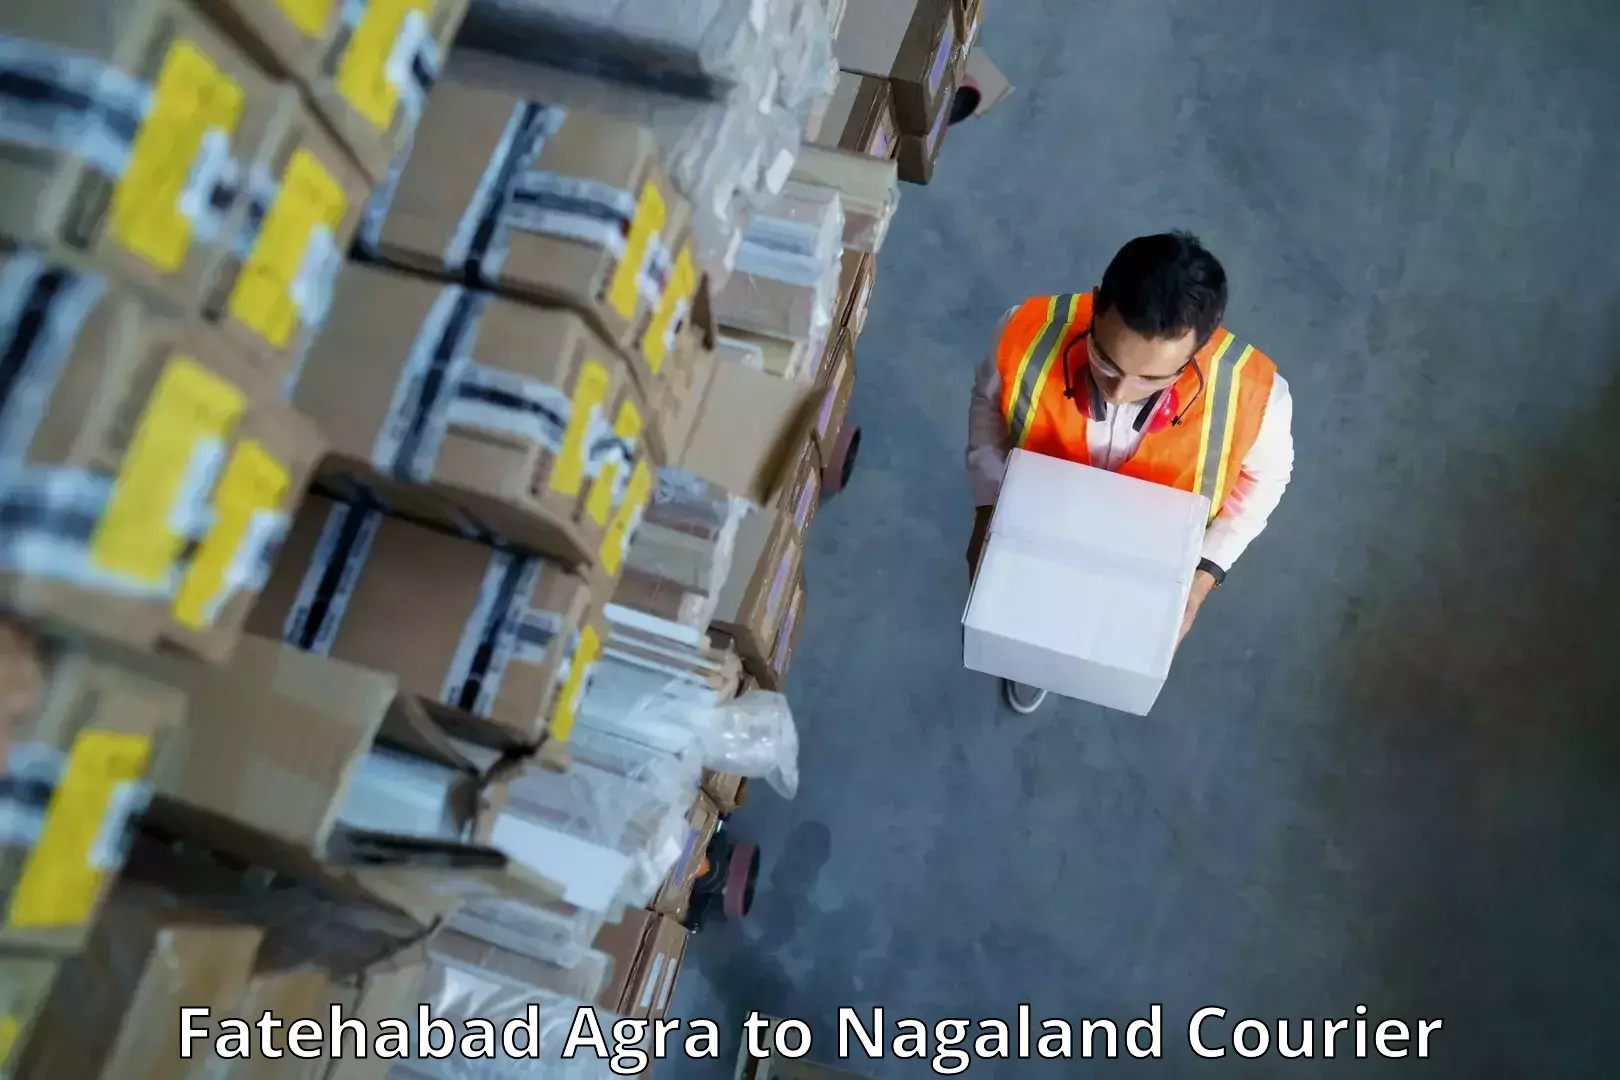 Efficient order fulfillment Fatehabad Agra to Nagaland